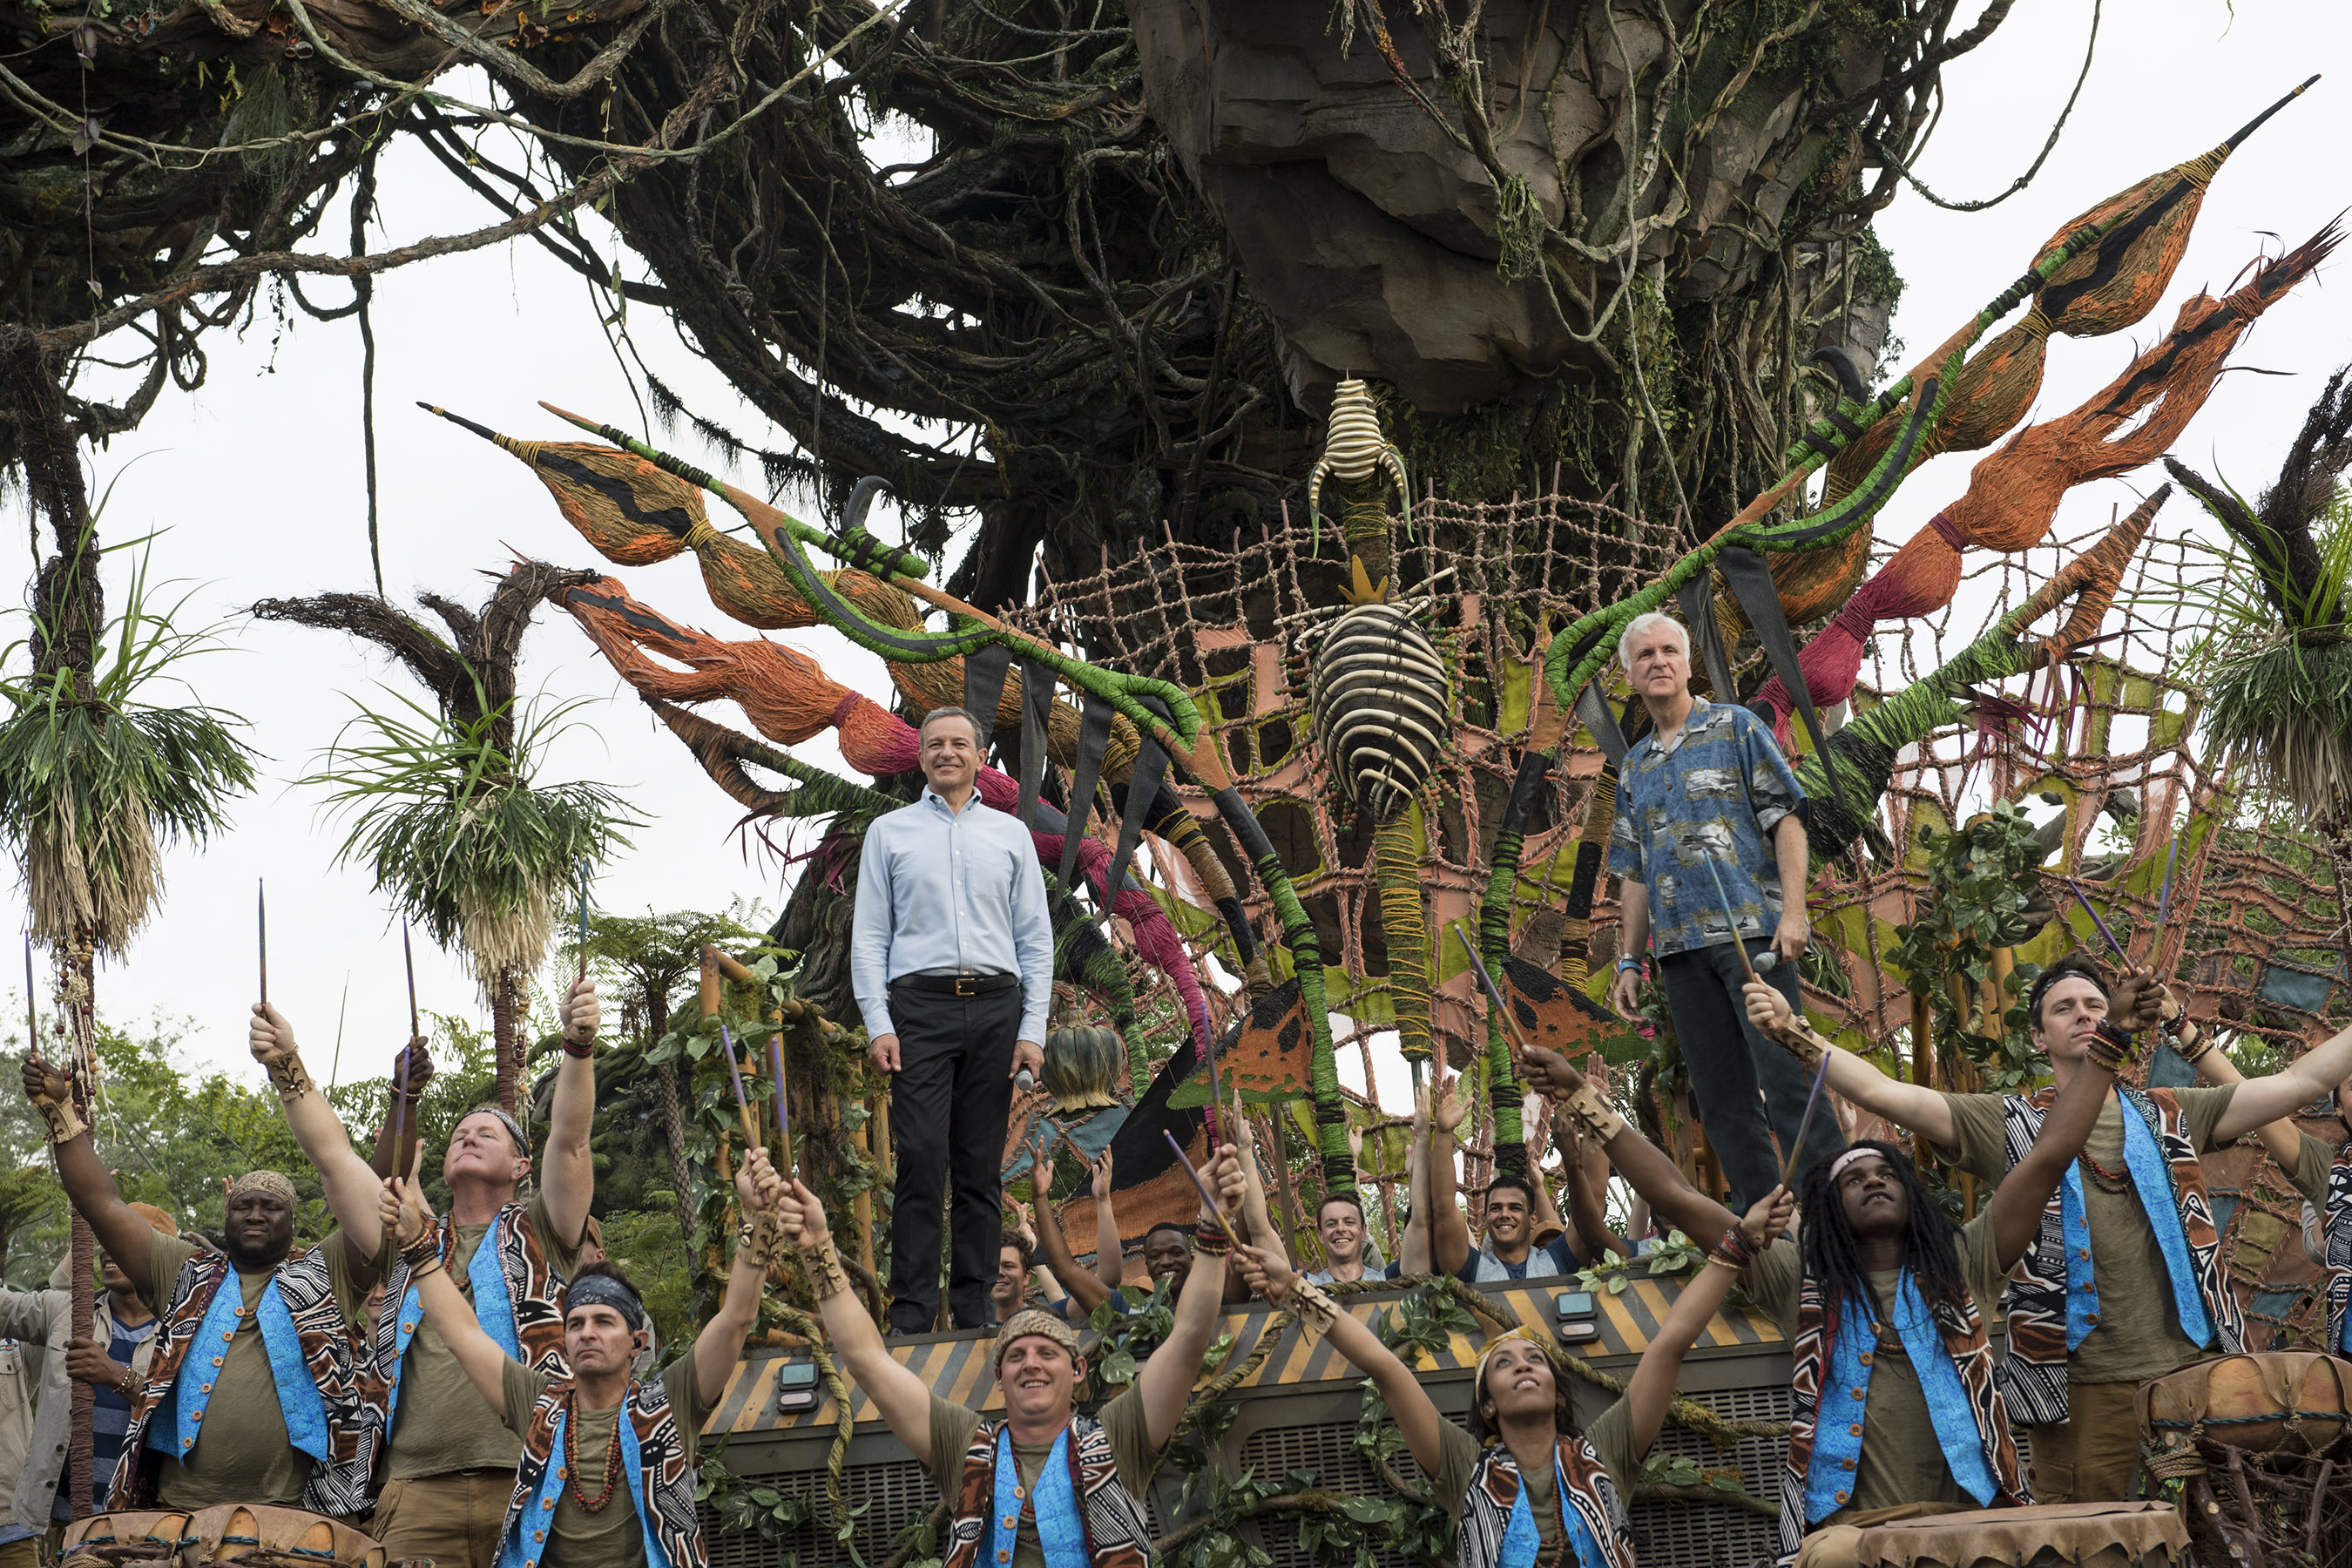 Pandora – The World of Avatar Dedicated Disney's Animal Kingdom - The Walt Disney Company